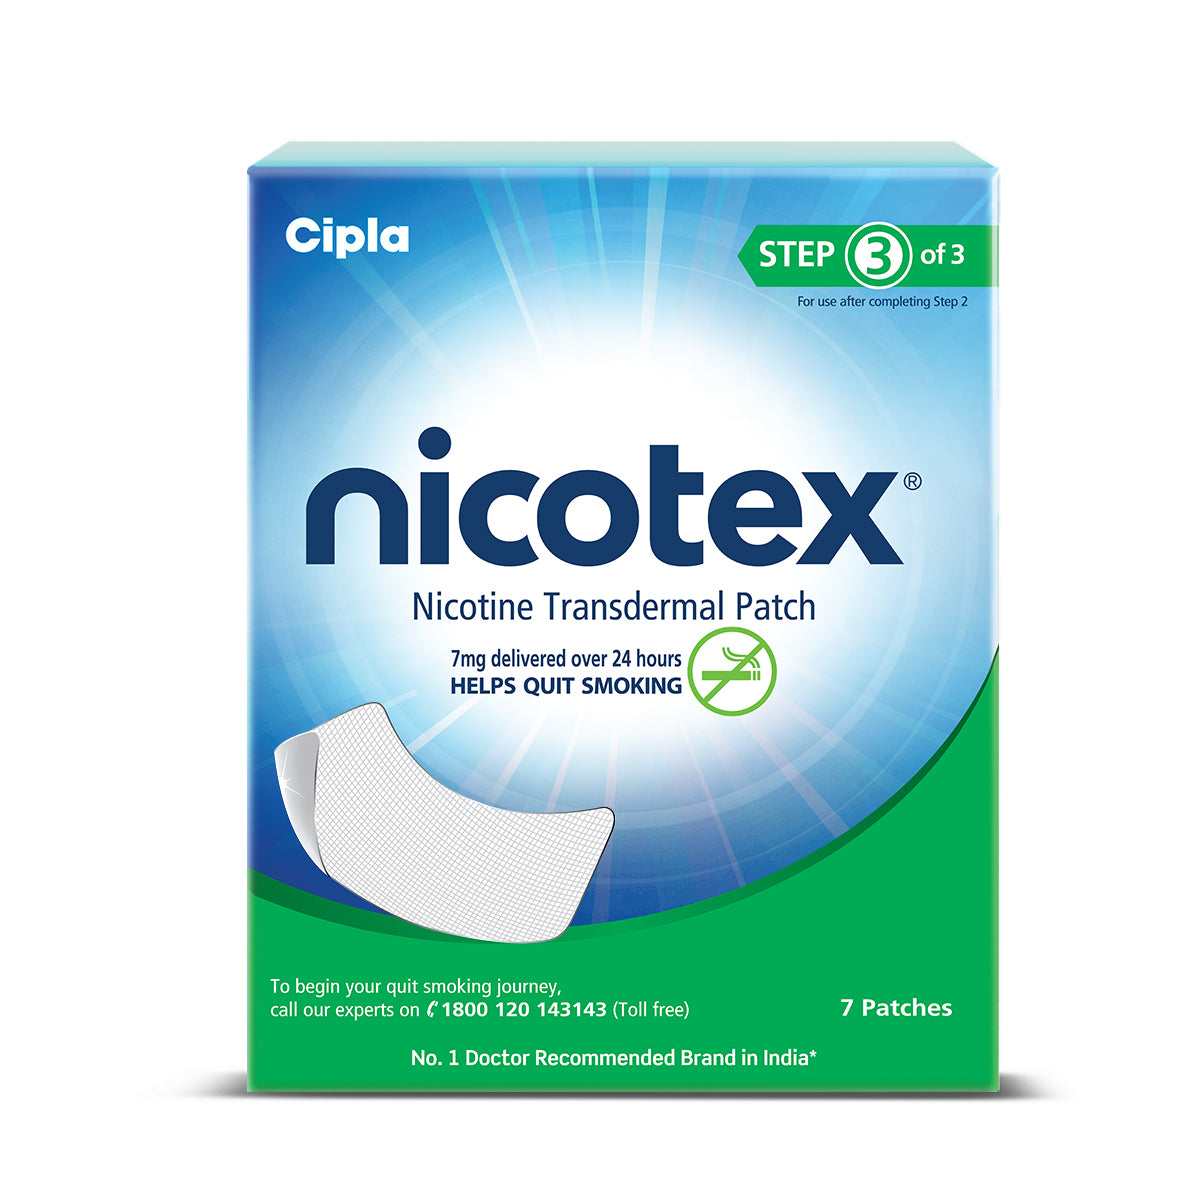 Nicotine Transdermal Patch for quitting smoking - Nicotex 7mg